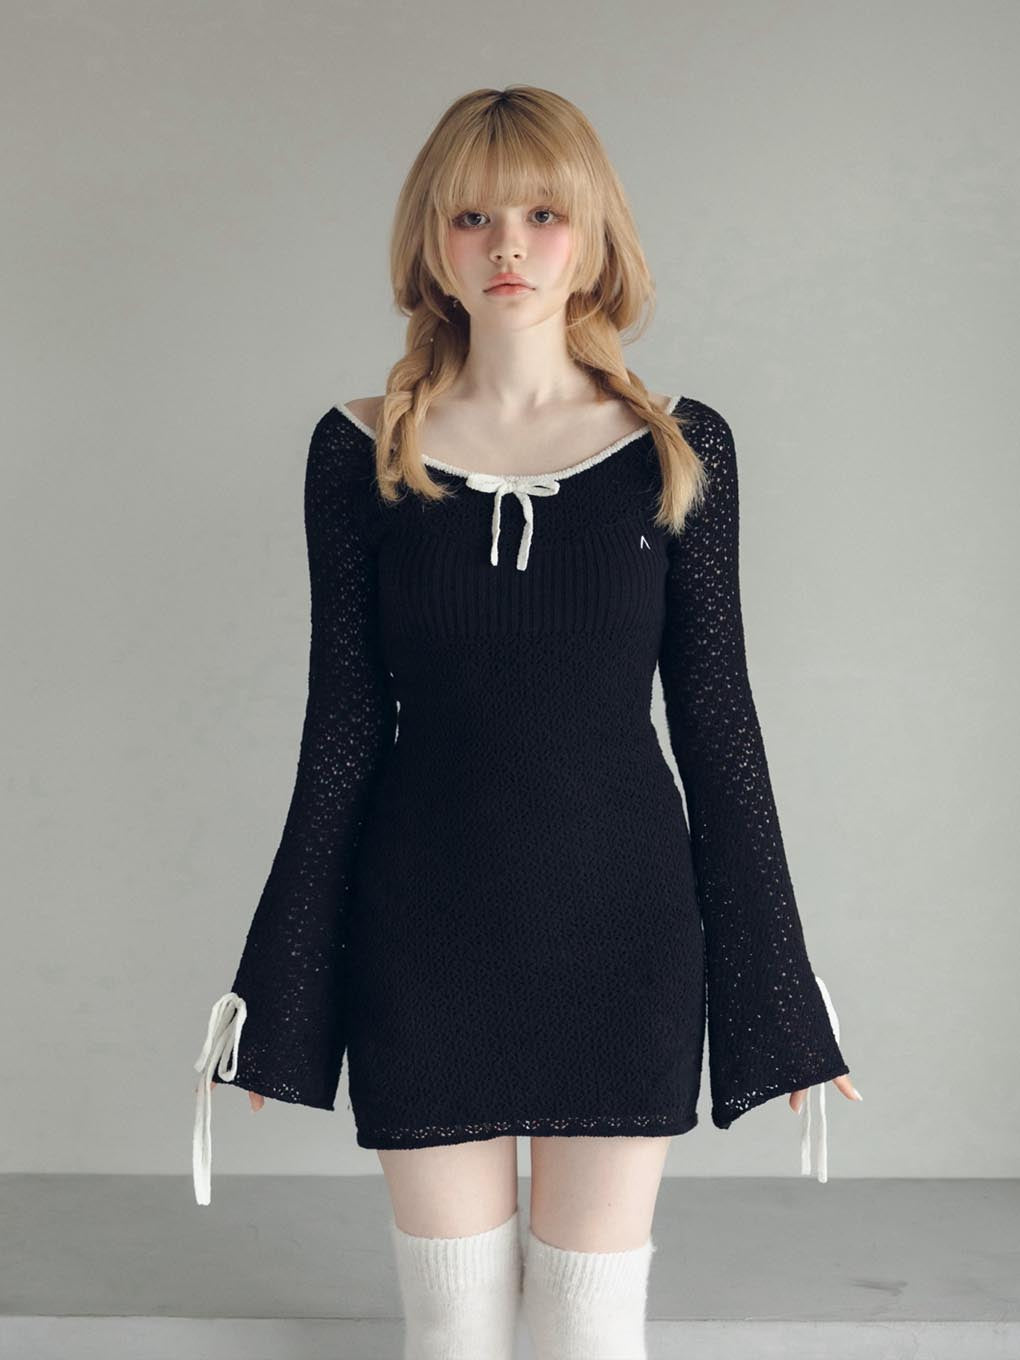 andmary Lily crochet mini dress blackブラック